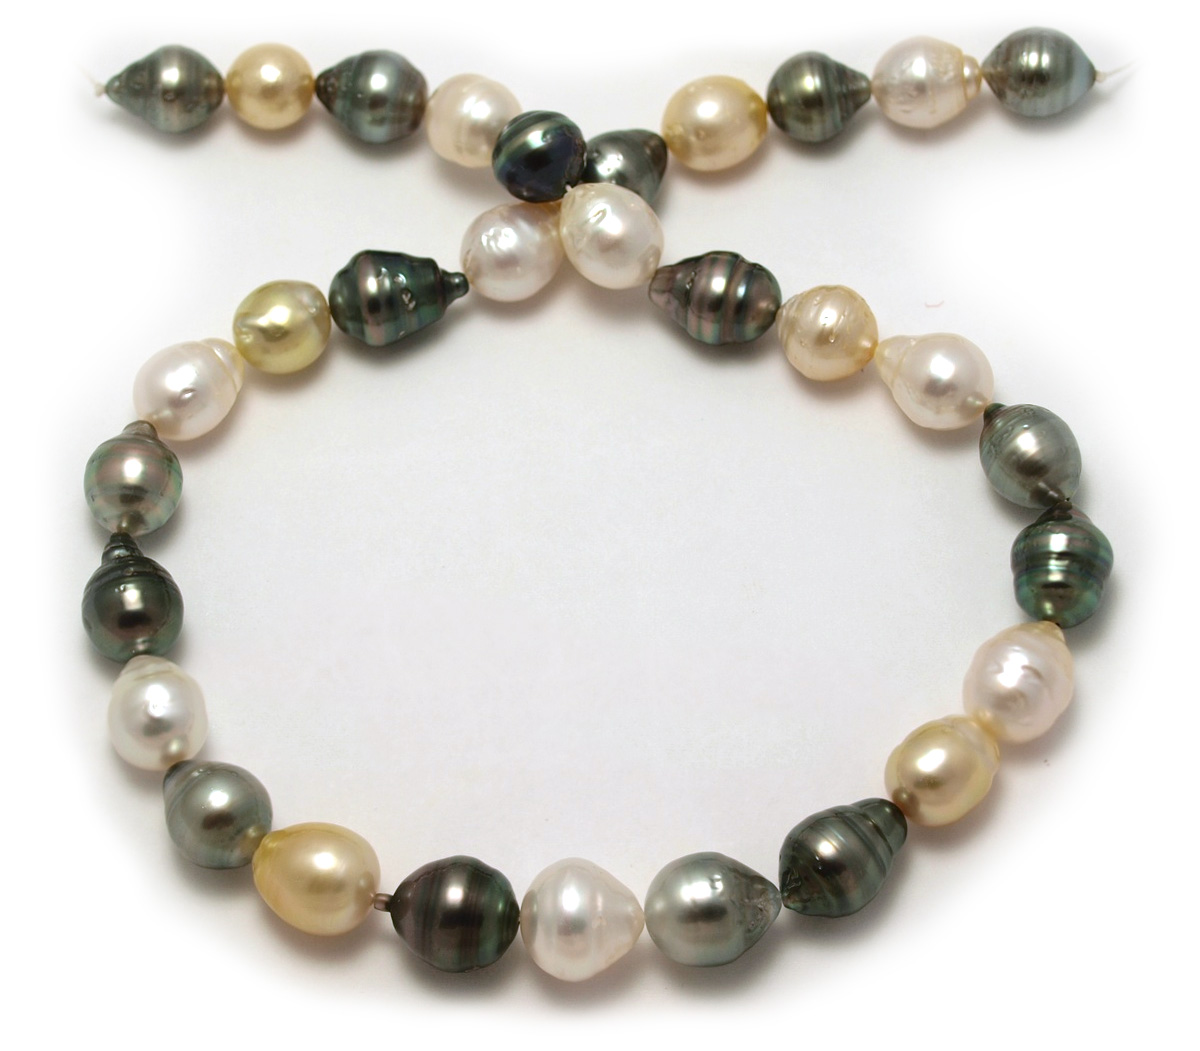 Color Block Acrylic Imitation Pearl Alloy Wholesale Bracelets, मोती का  ब्रेसलेट - Momentane Jewels LLP, Rajkot | ID: 2853026772033